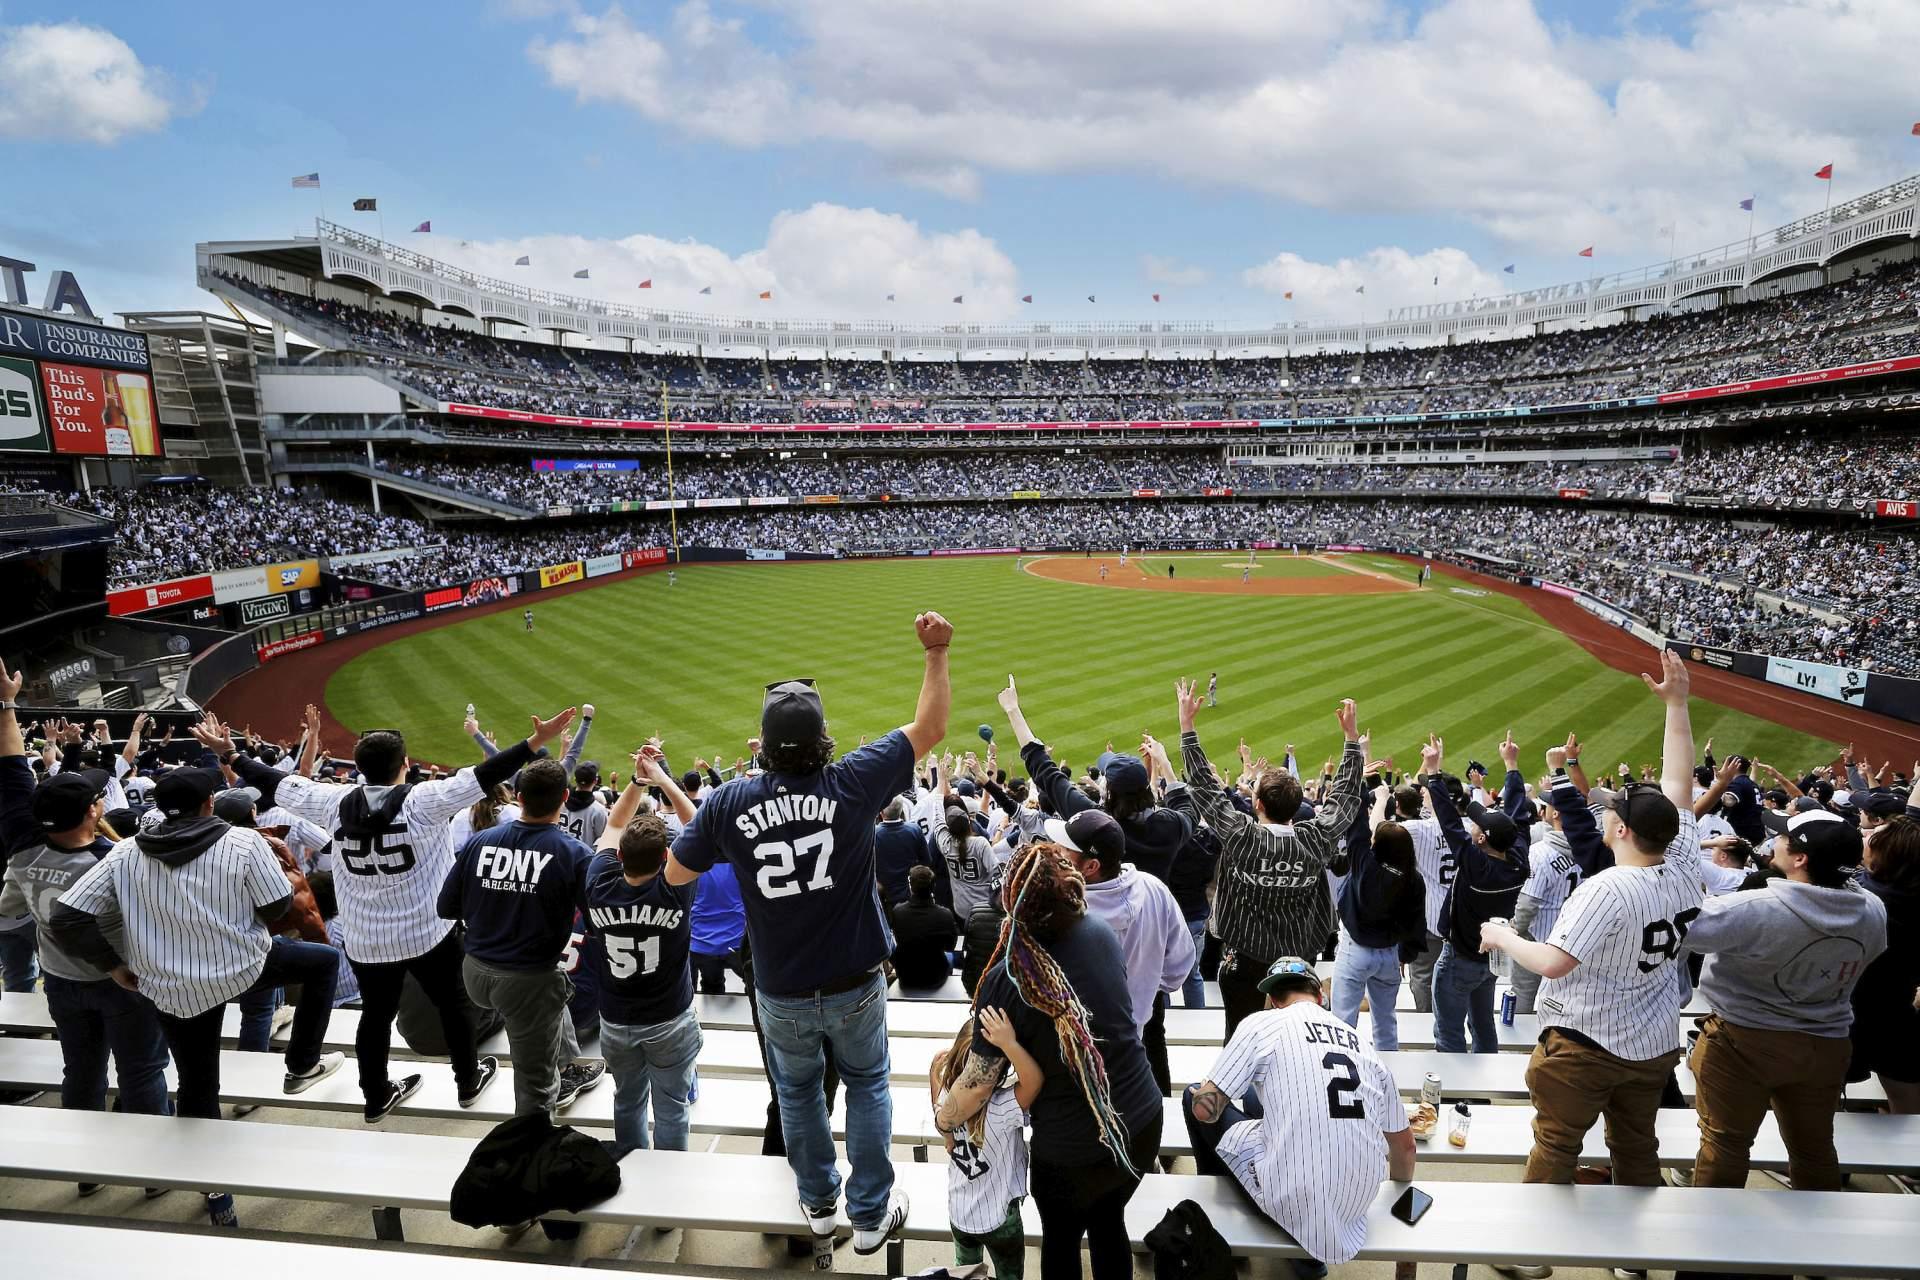 People cheer at the Yankee Stadium